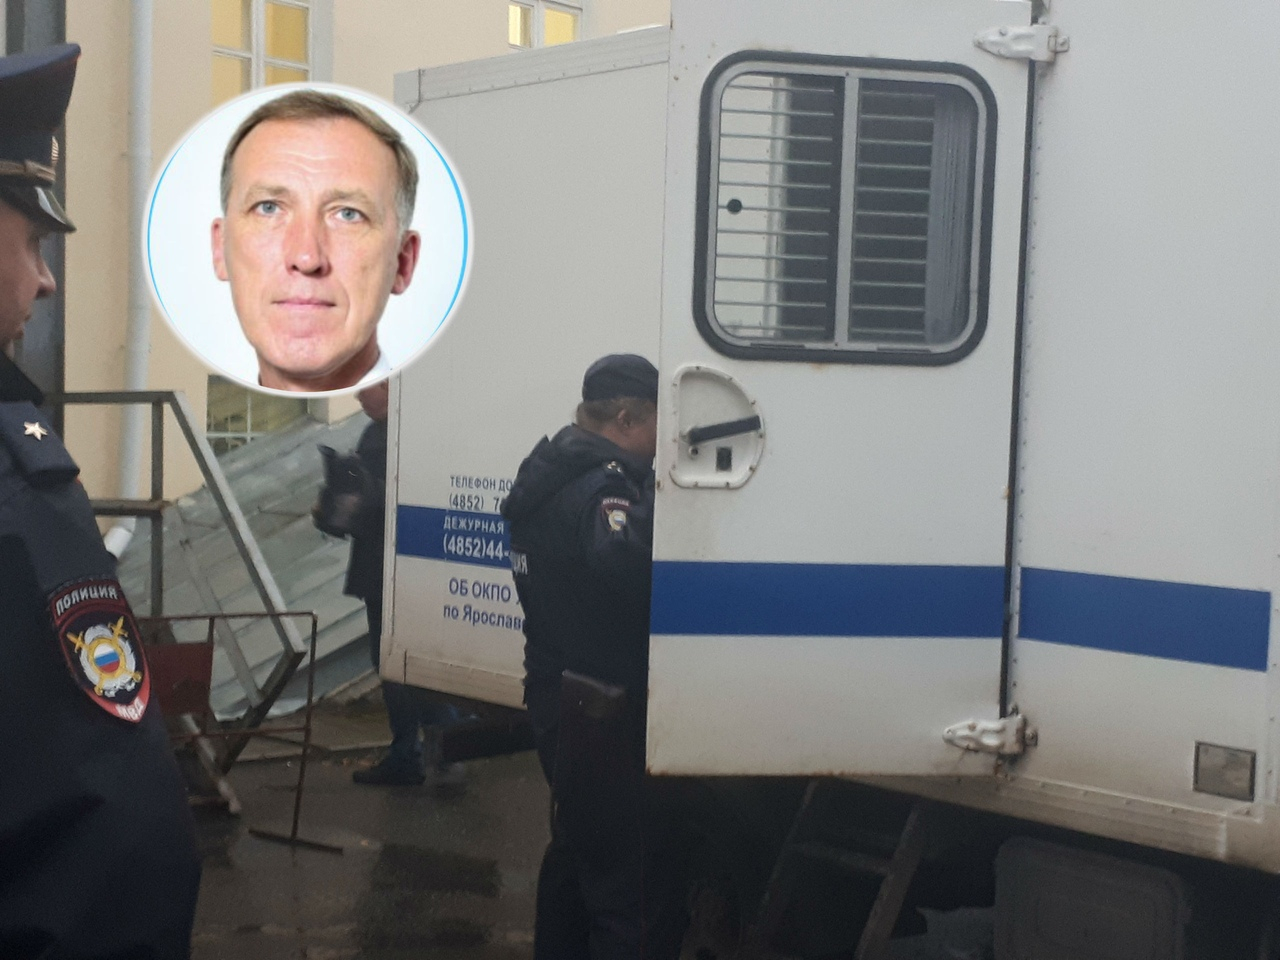 Экс-председателя фракции "Единая Россия" осудили за убийство в Ярославской области